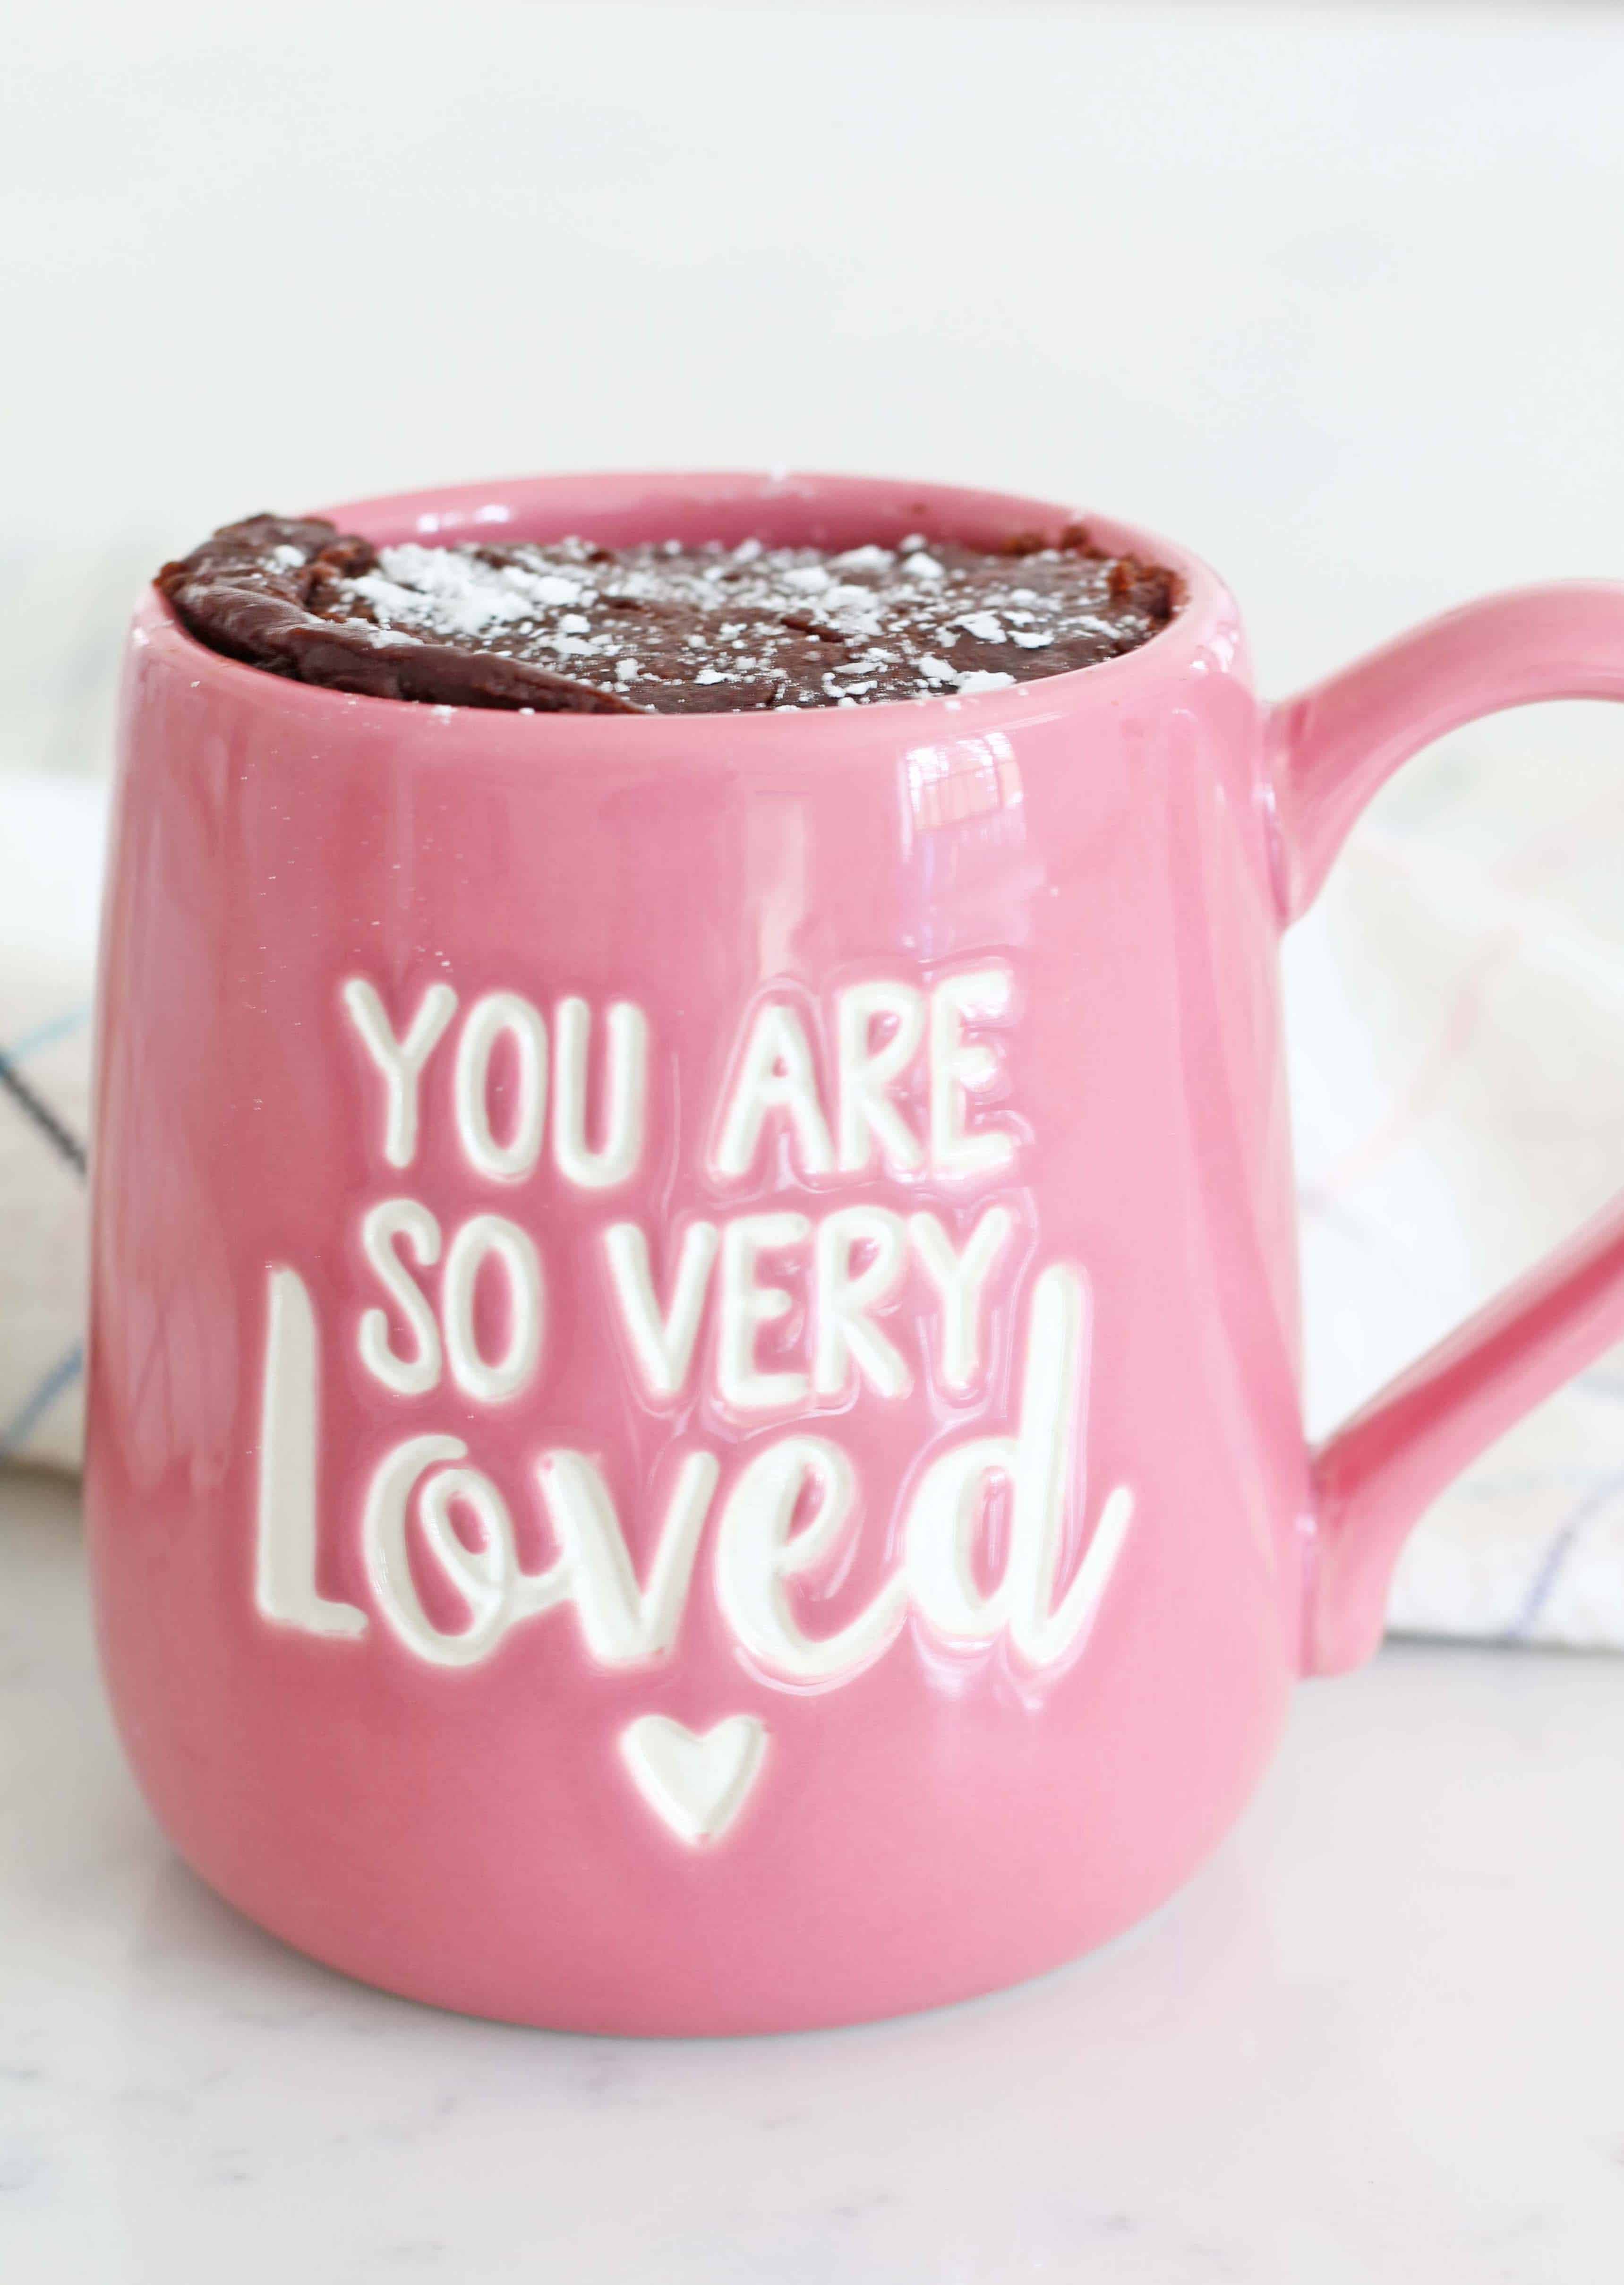 our name is mud mug, chocolate cake in a pink coffee mug